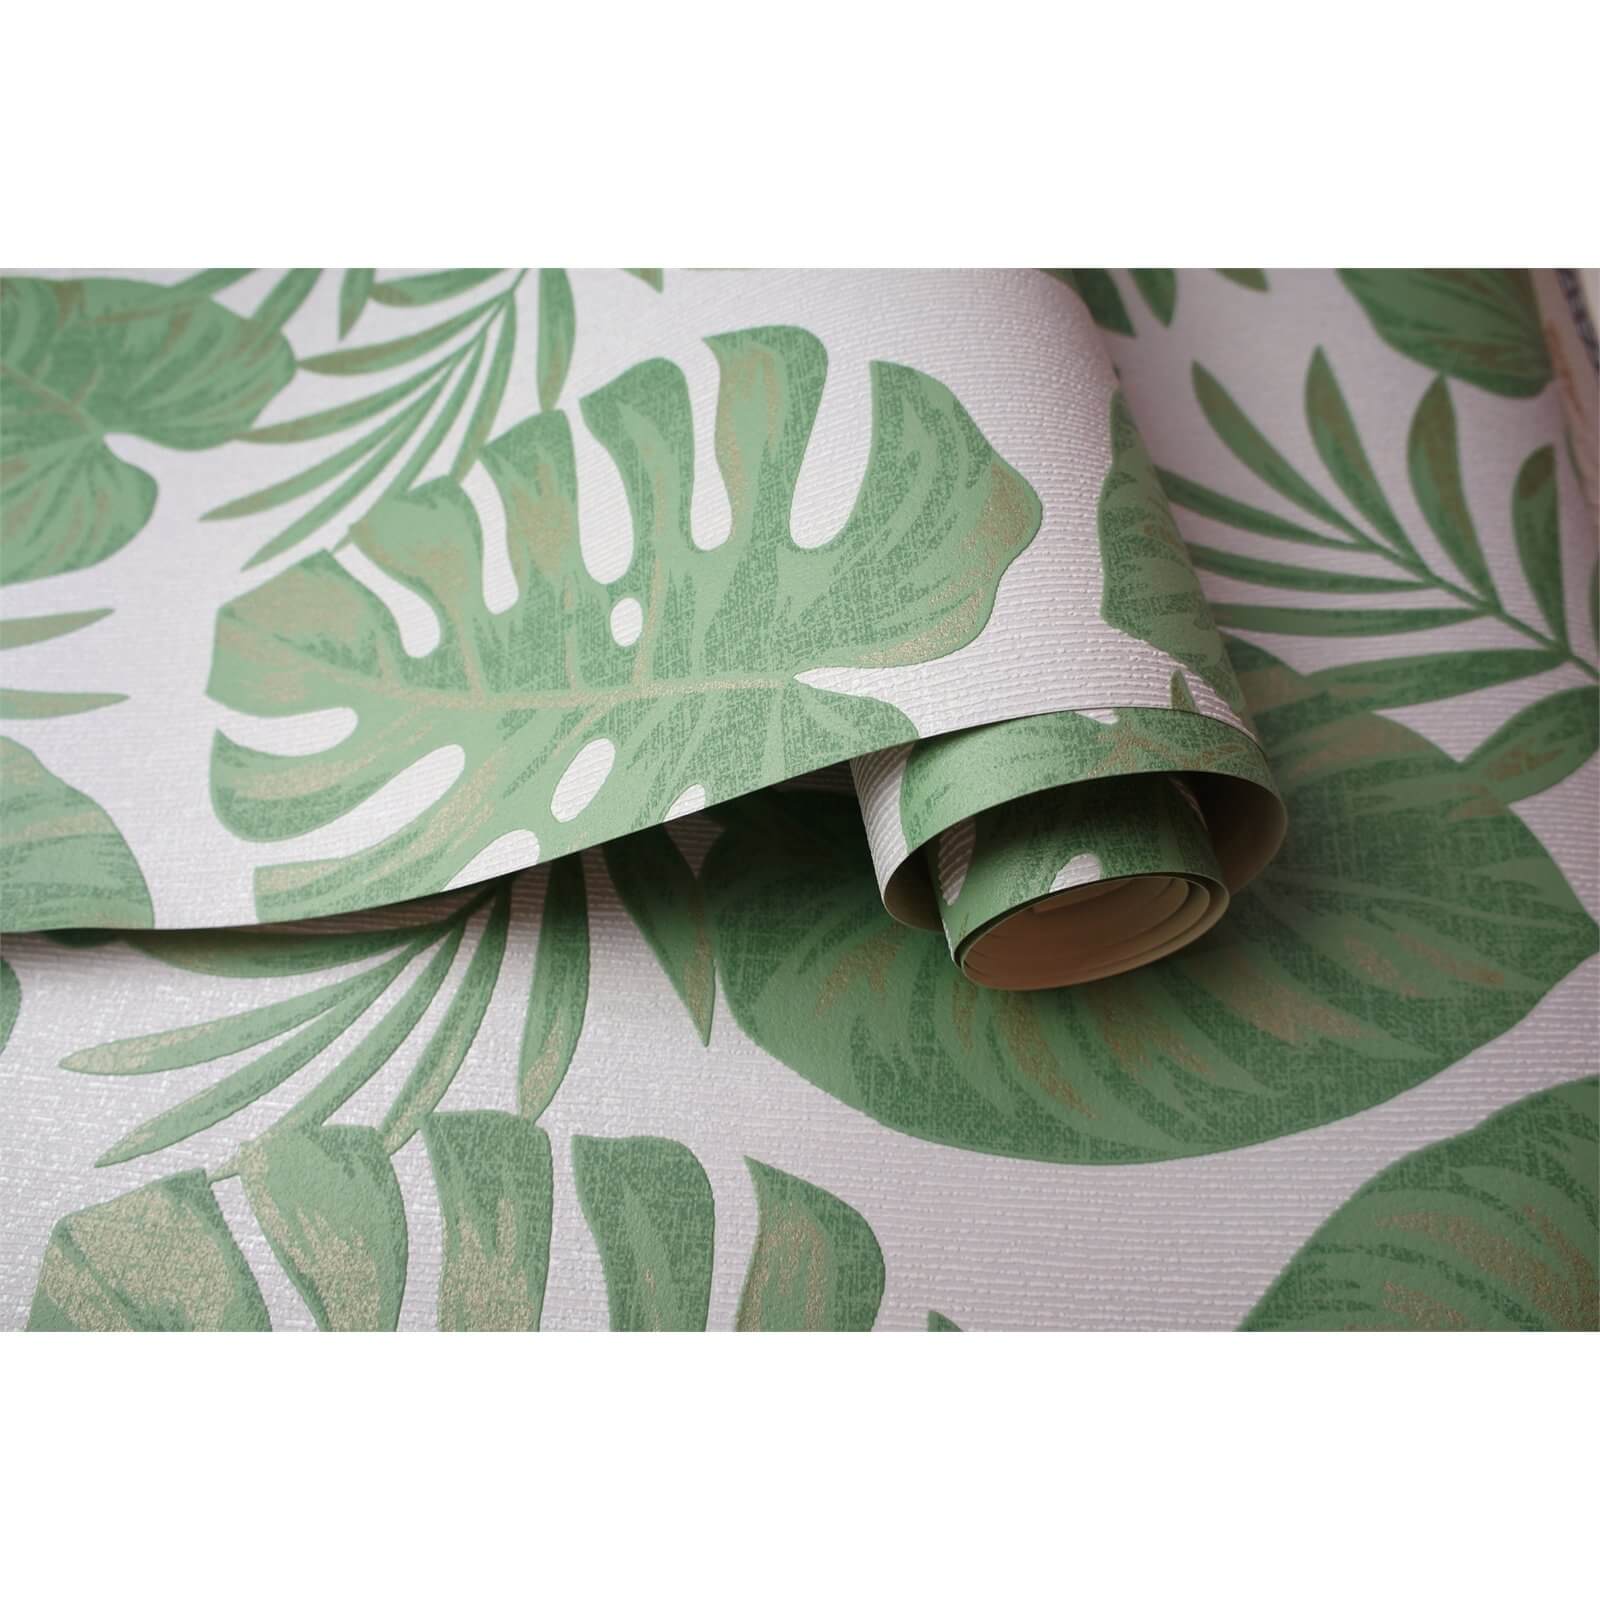 Holden Decor Riviera Leaf Textured Metallic Grey and Green Wallpaper